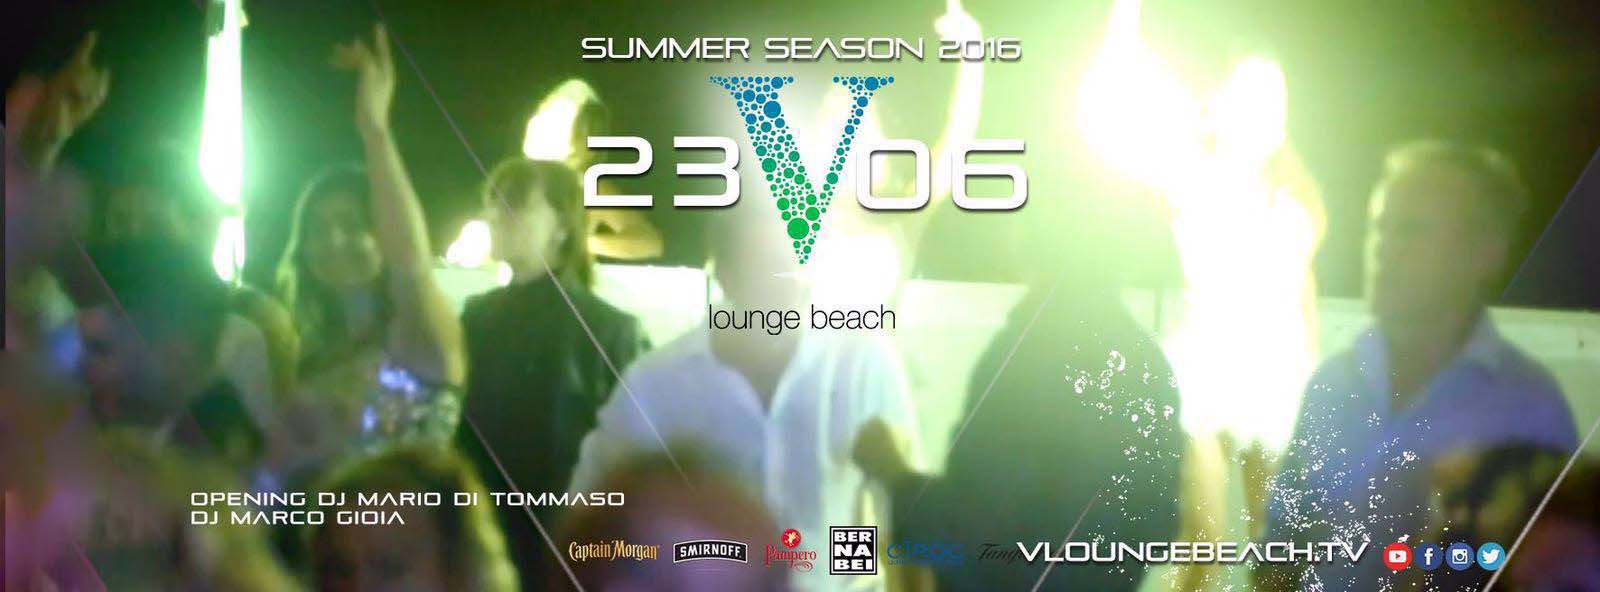 V Lounge Ostia - Giovedi 23 Giugno 2016 - Aperitivo Live Discoteca